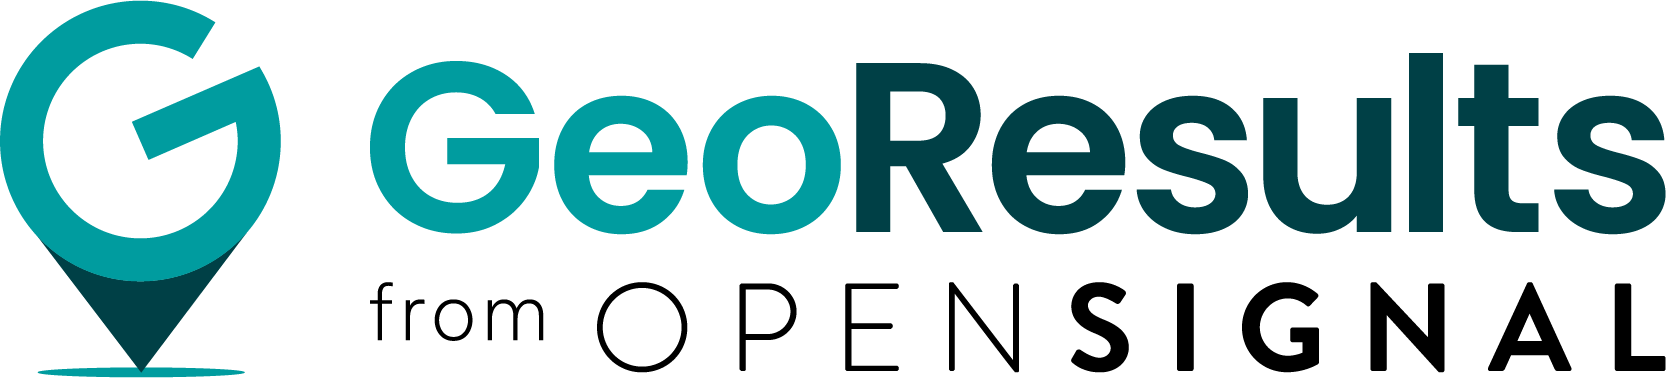 GeoResults-Opensignal logo